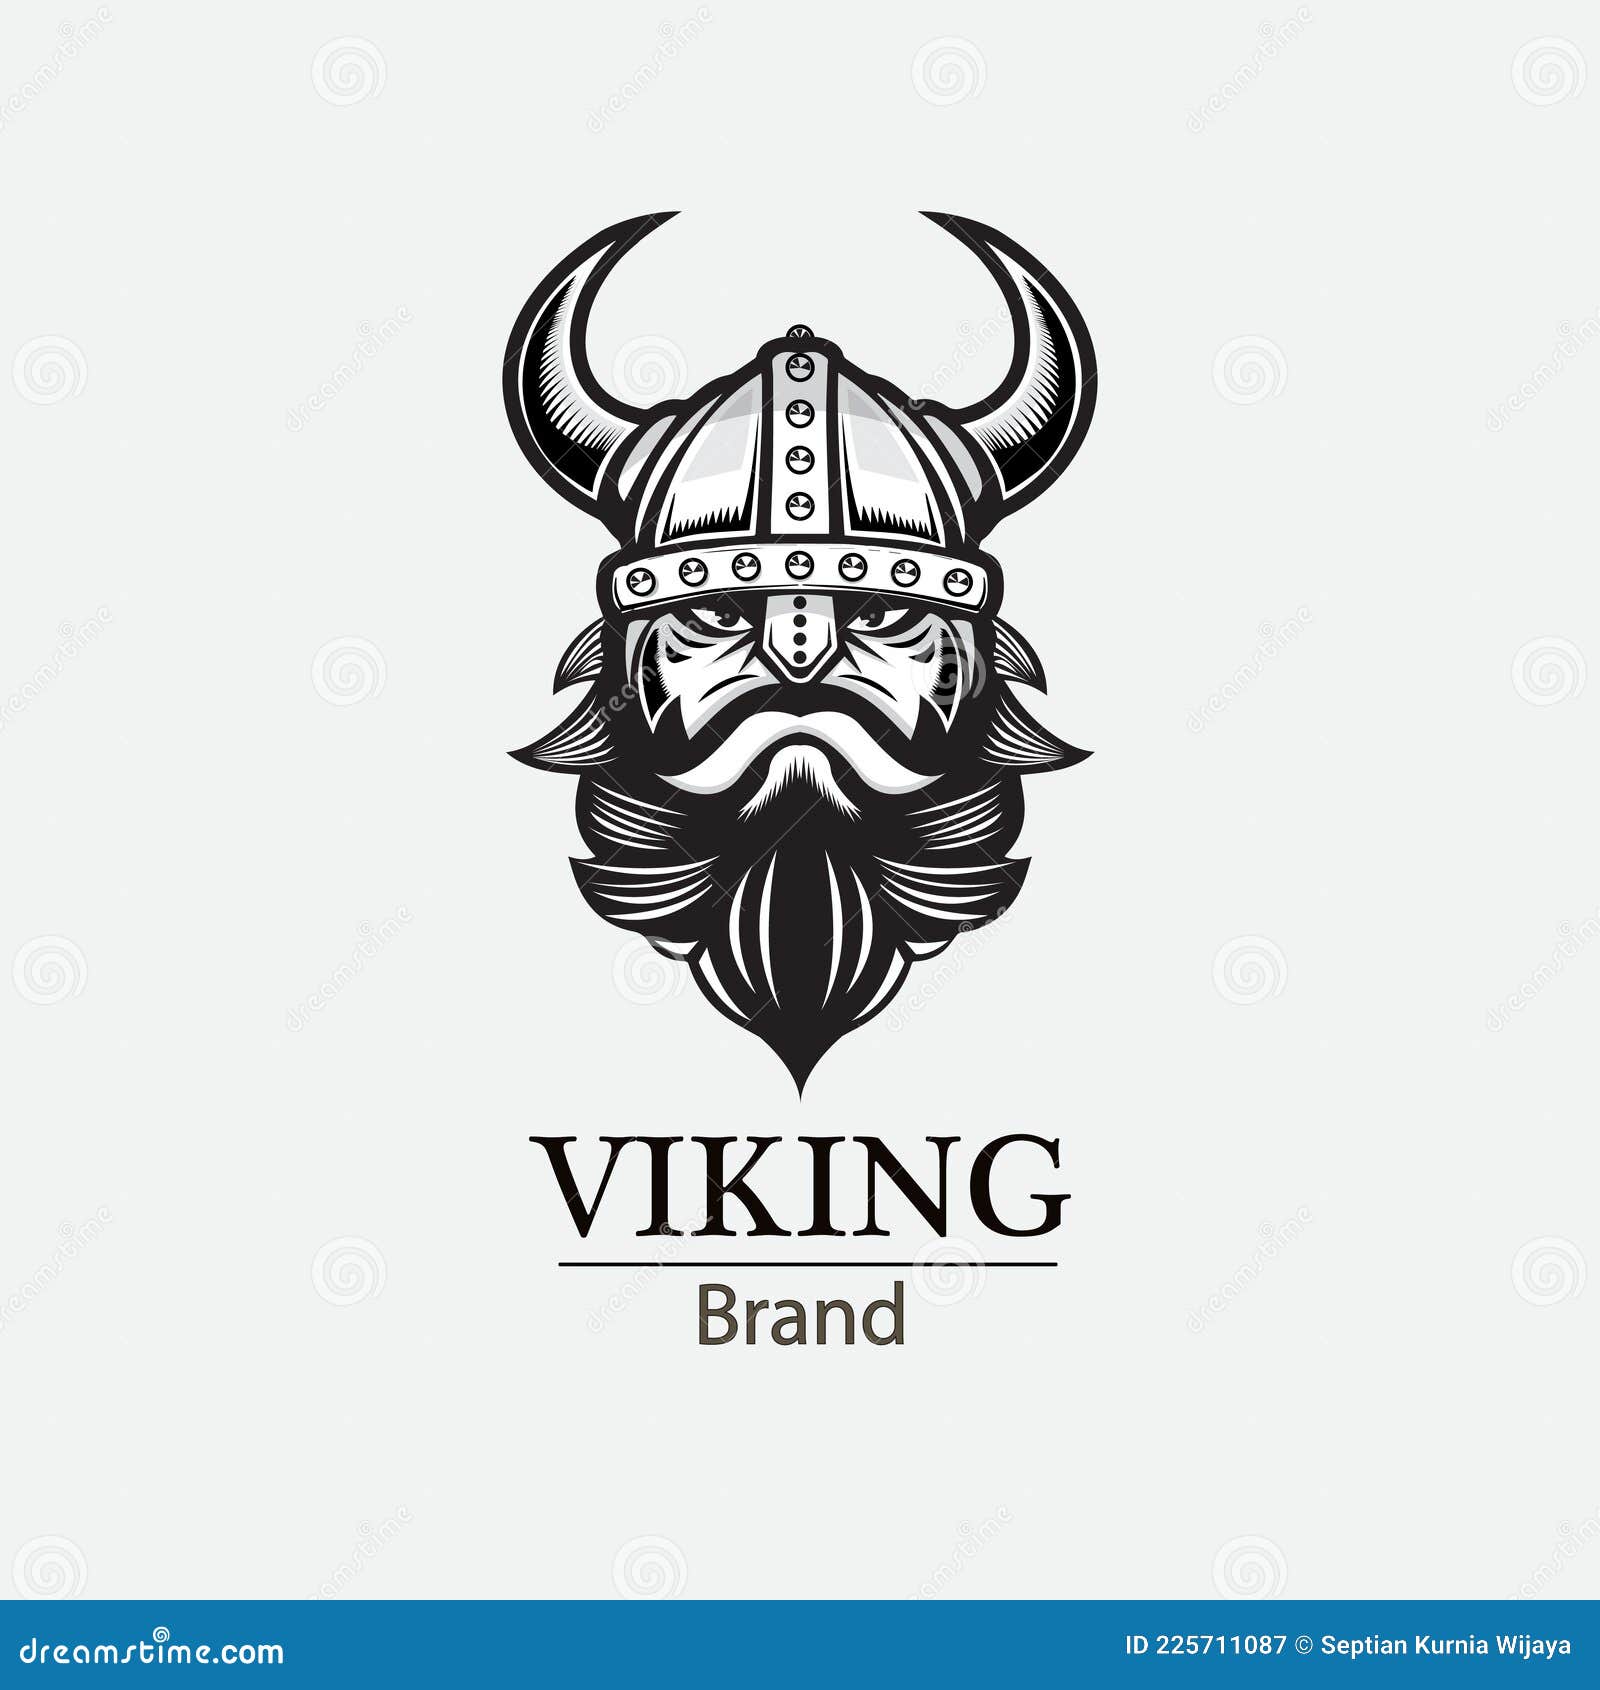 Viking Logo Wearing a Horned Headpiece. Viking Pirates Stock Vector ...